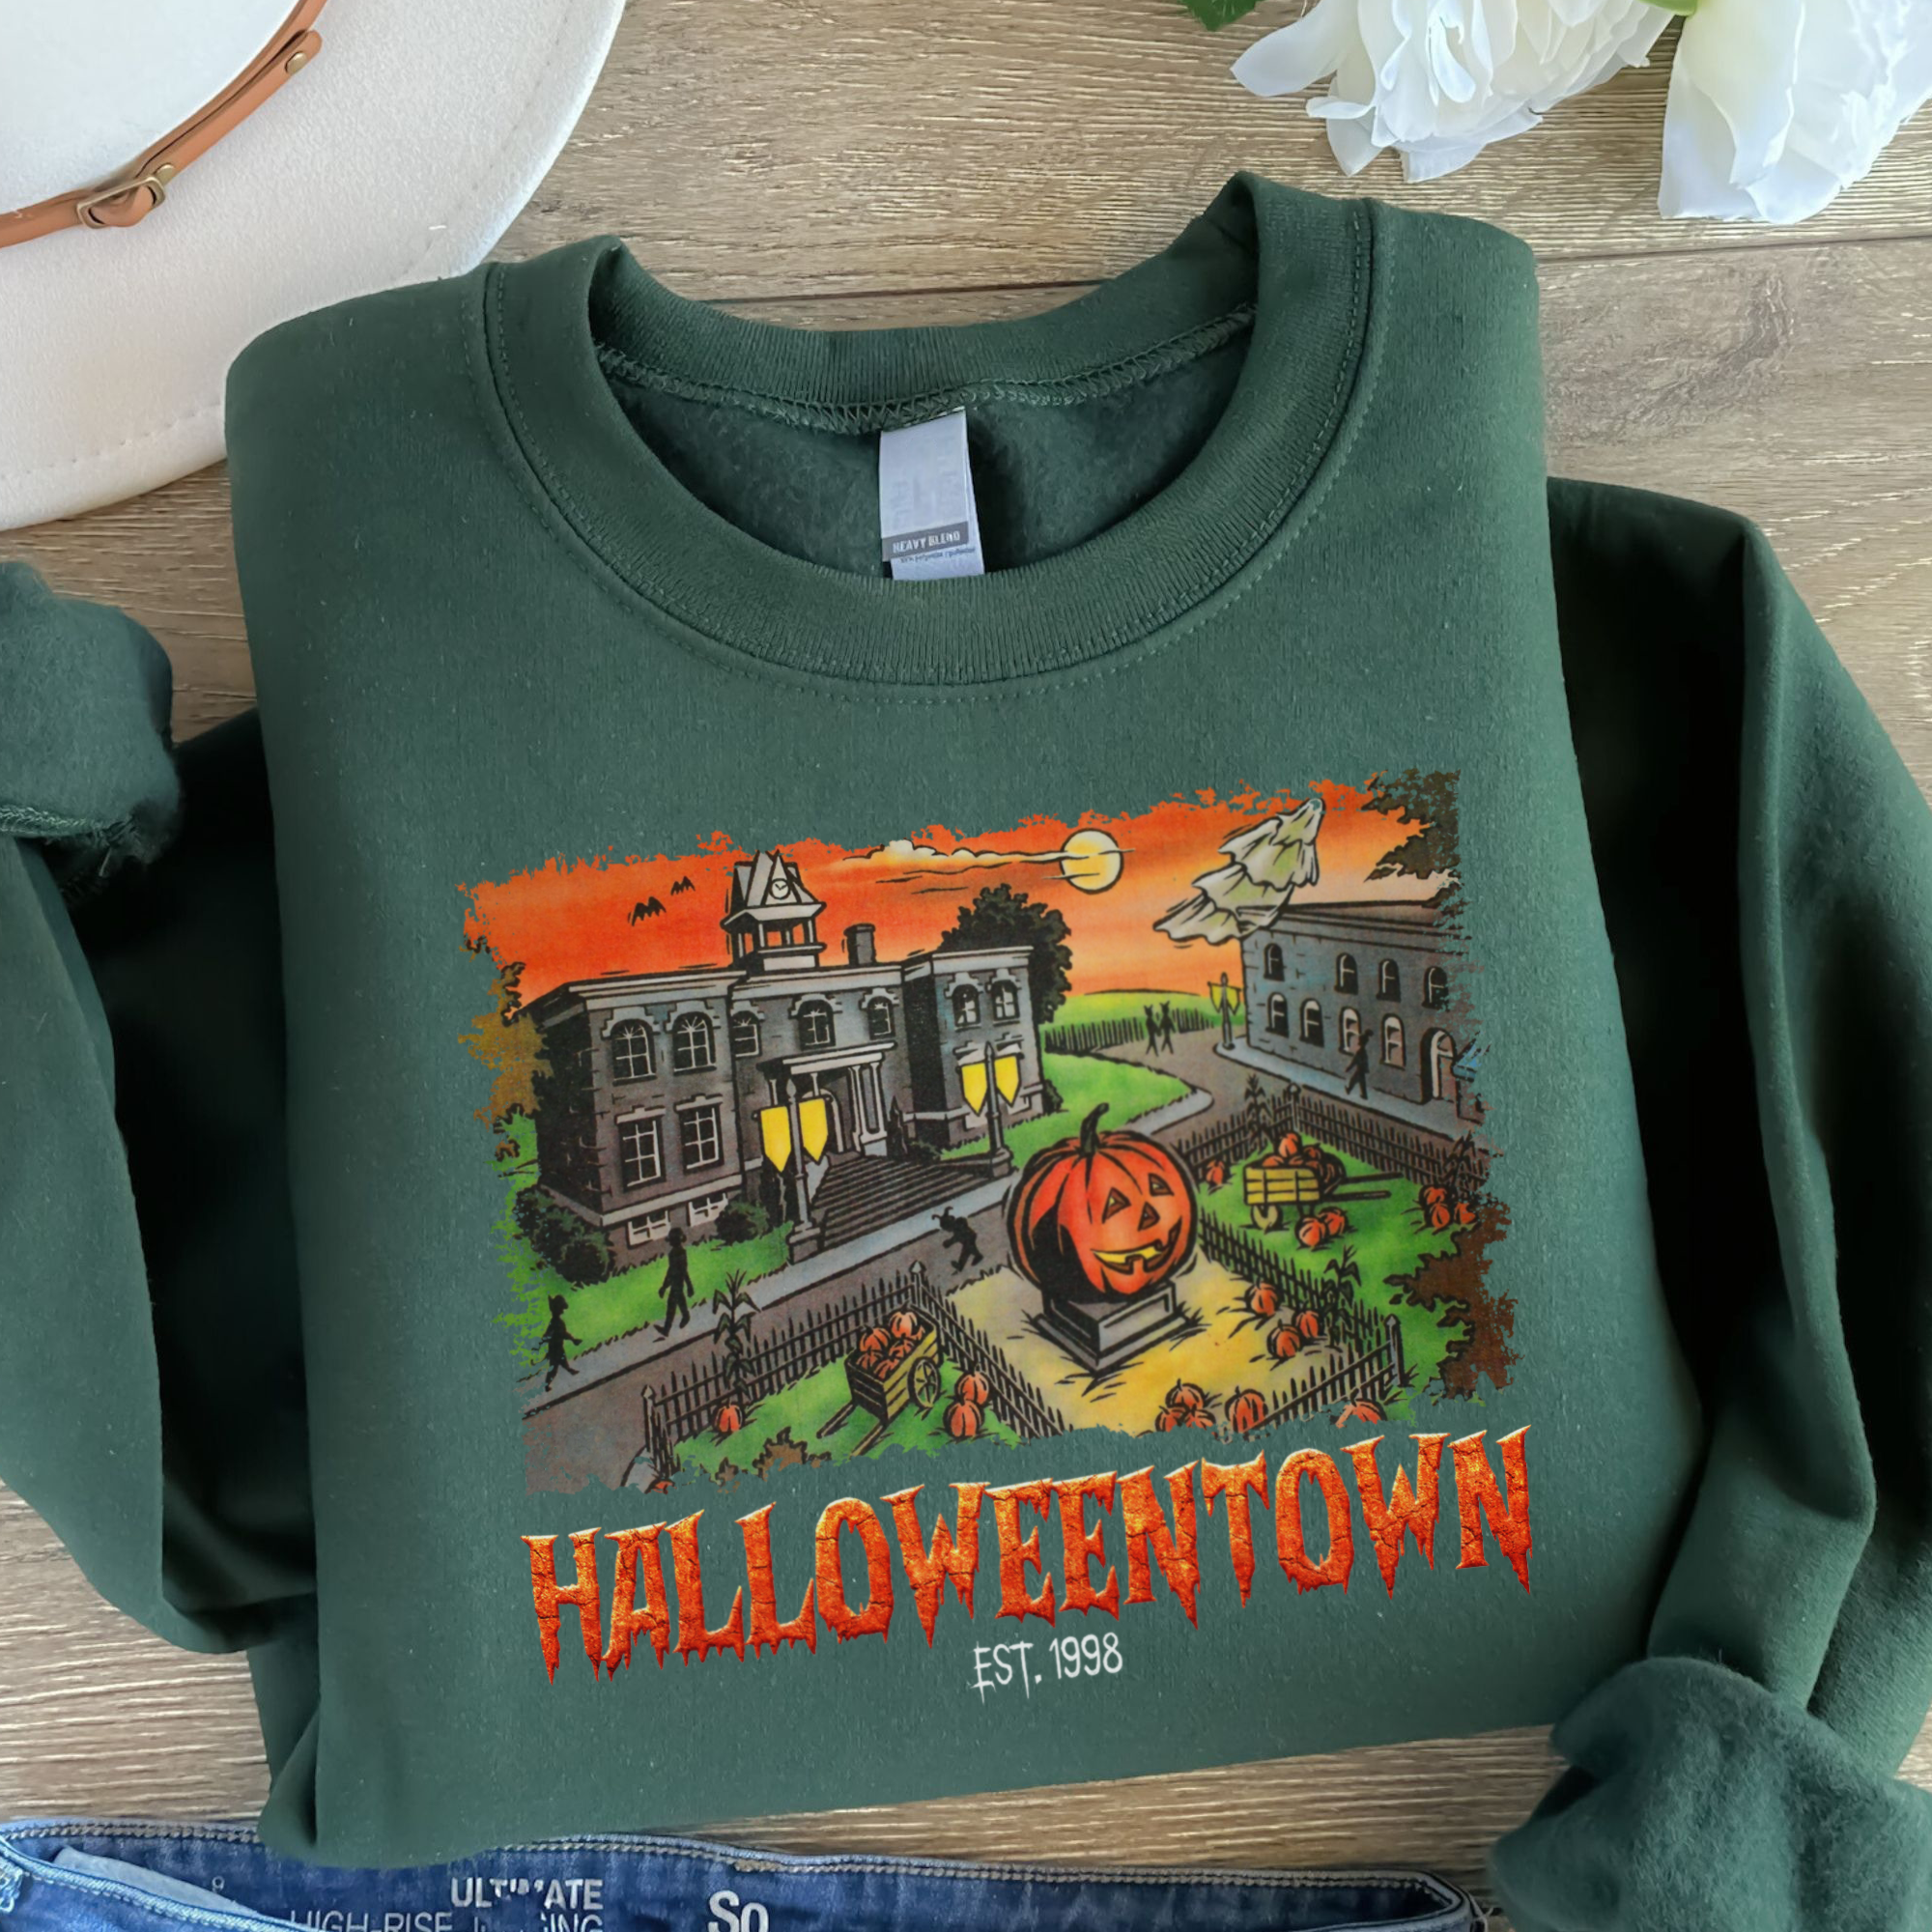 A great Sweatshirt to get in on the Halloween spirit. allSKUs